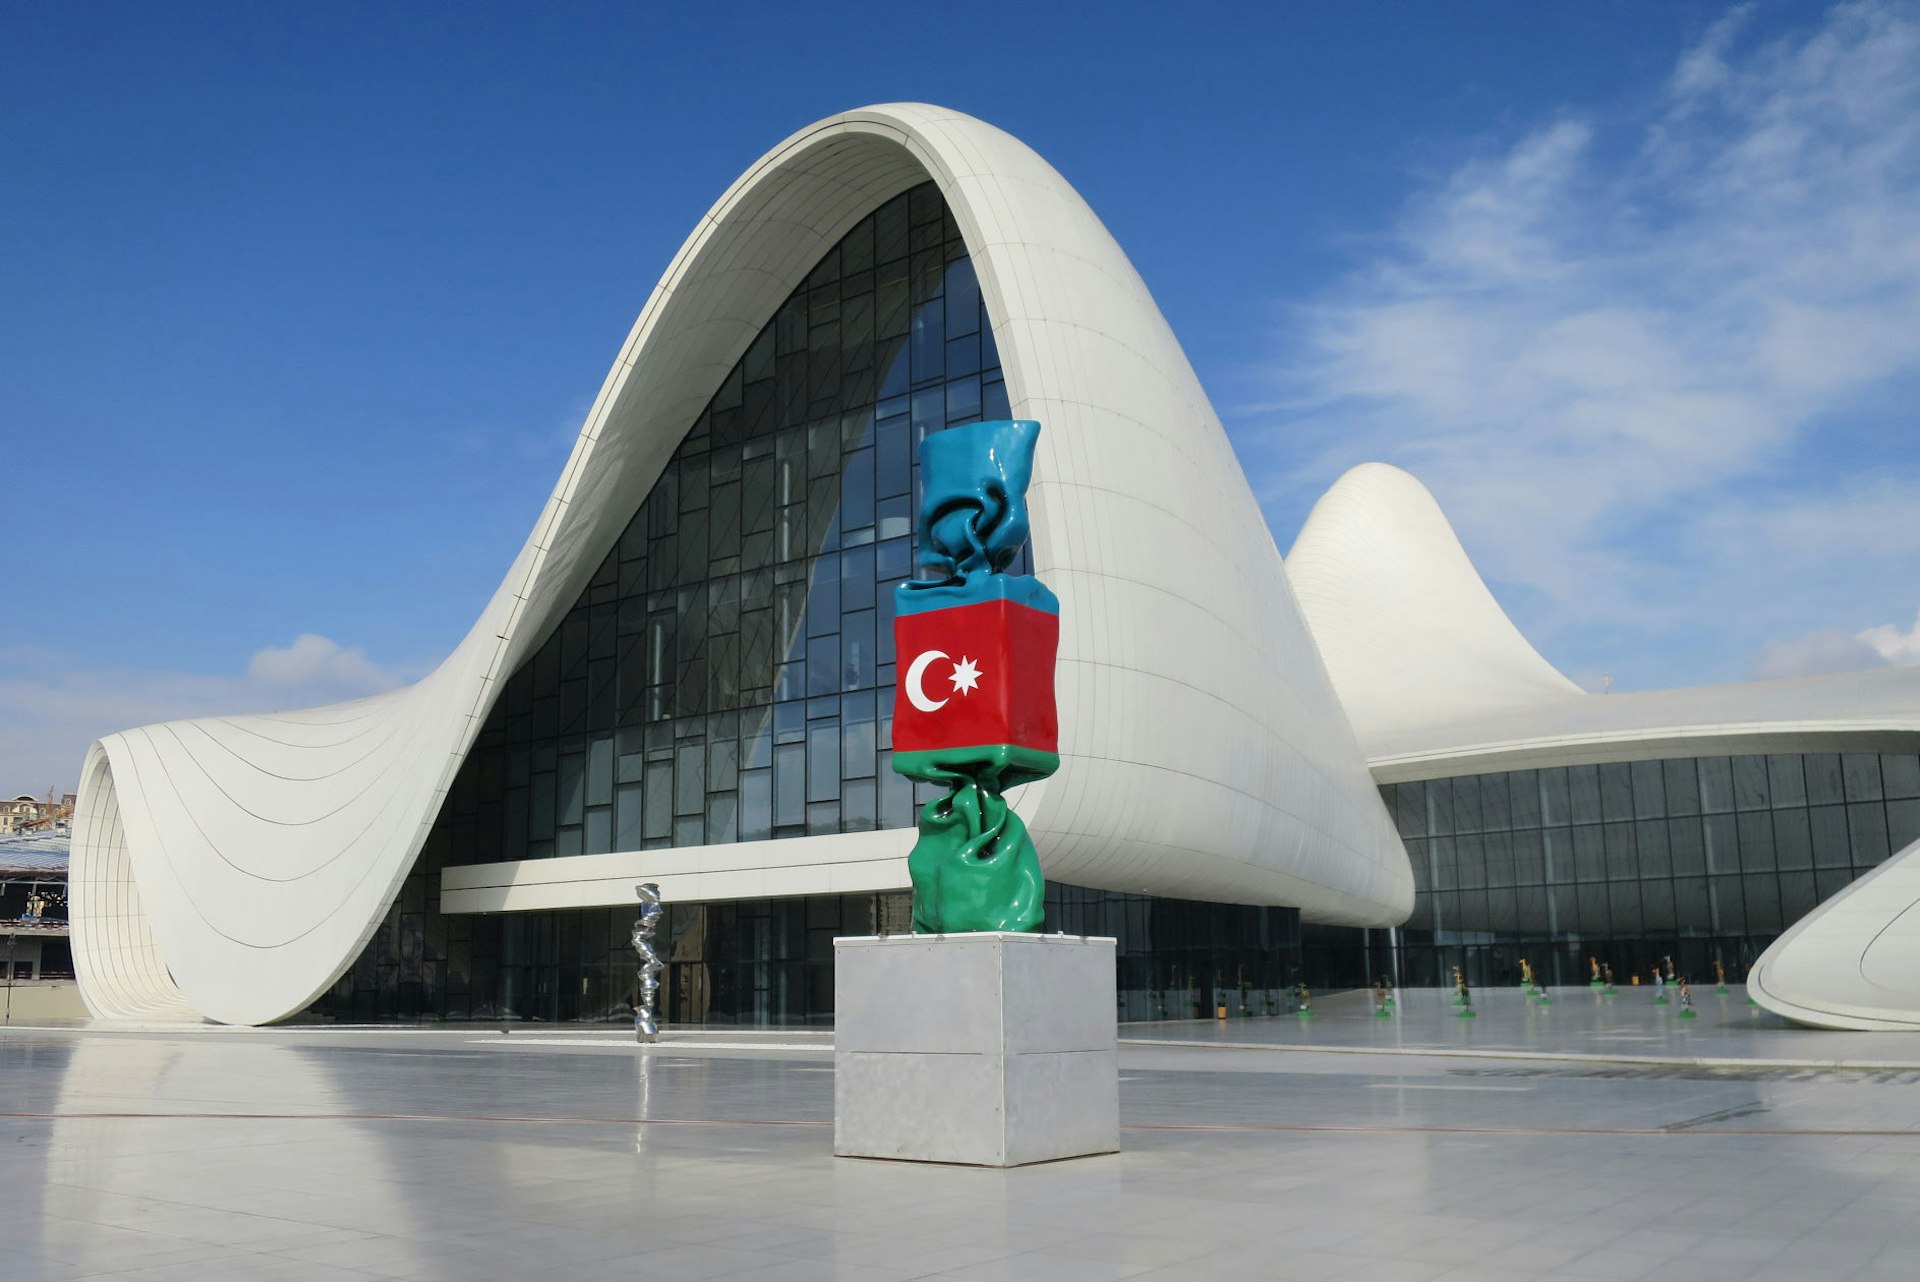 Heydar Aliyev Cultural Centre, Baku. Image by Sarah Reid / Lonely Planet